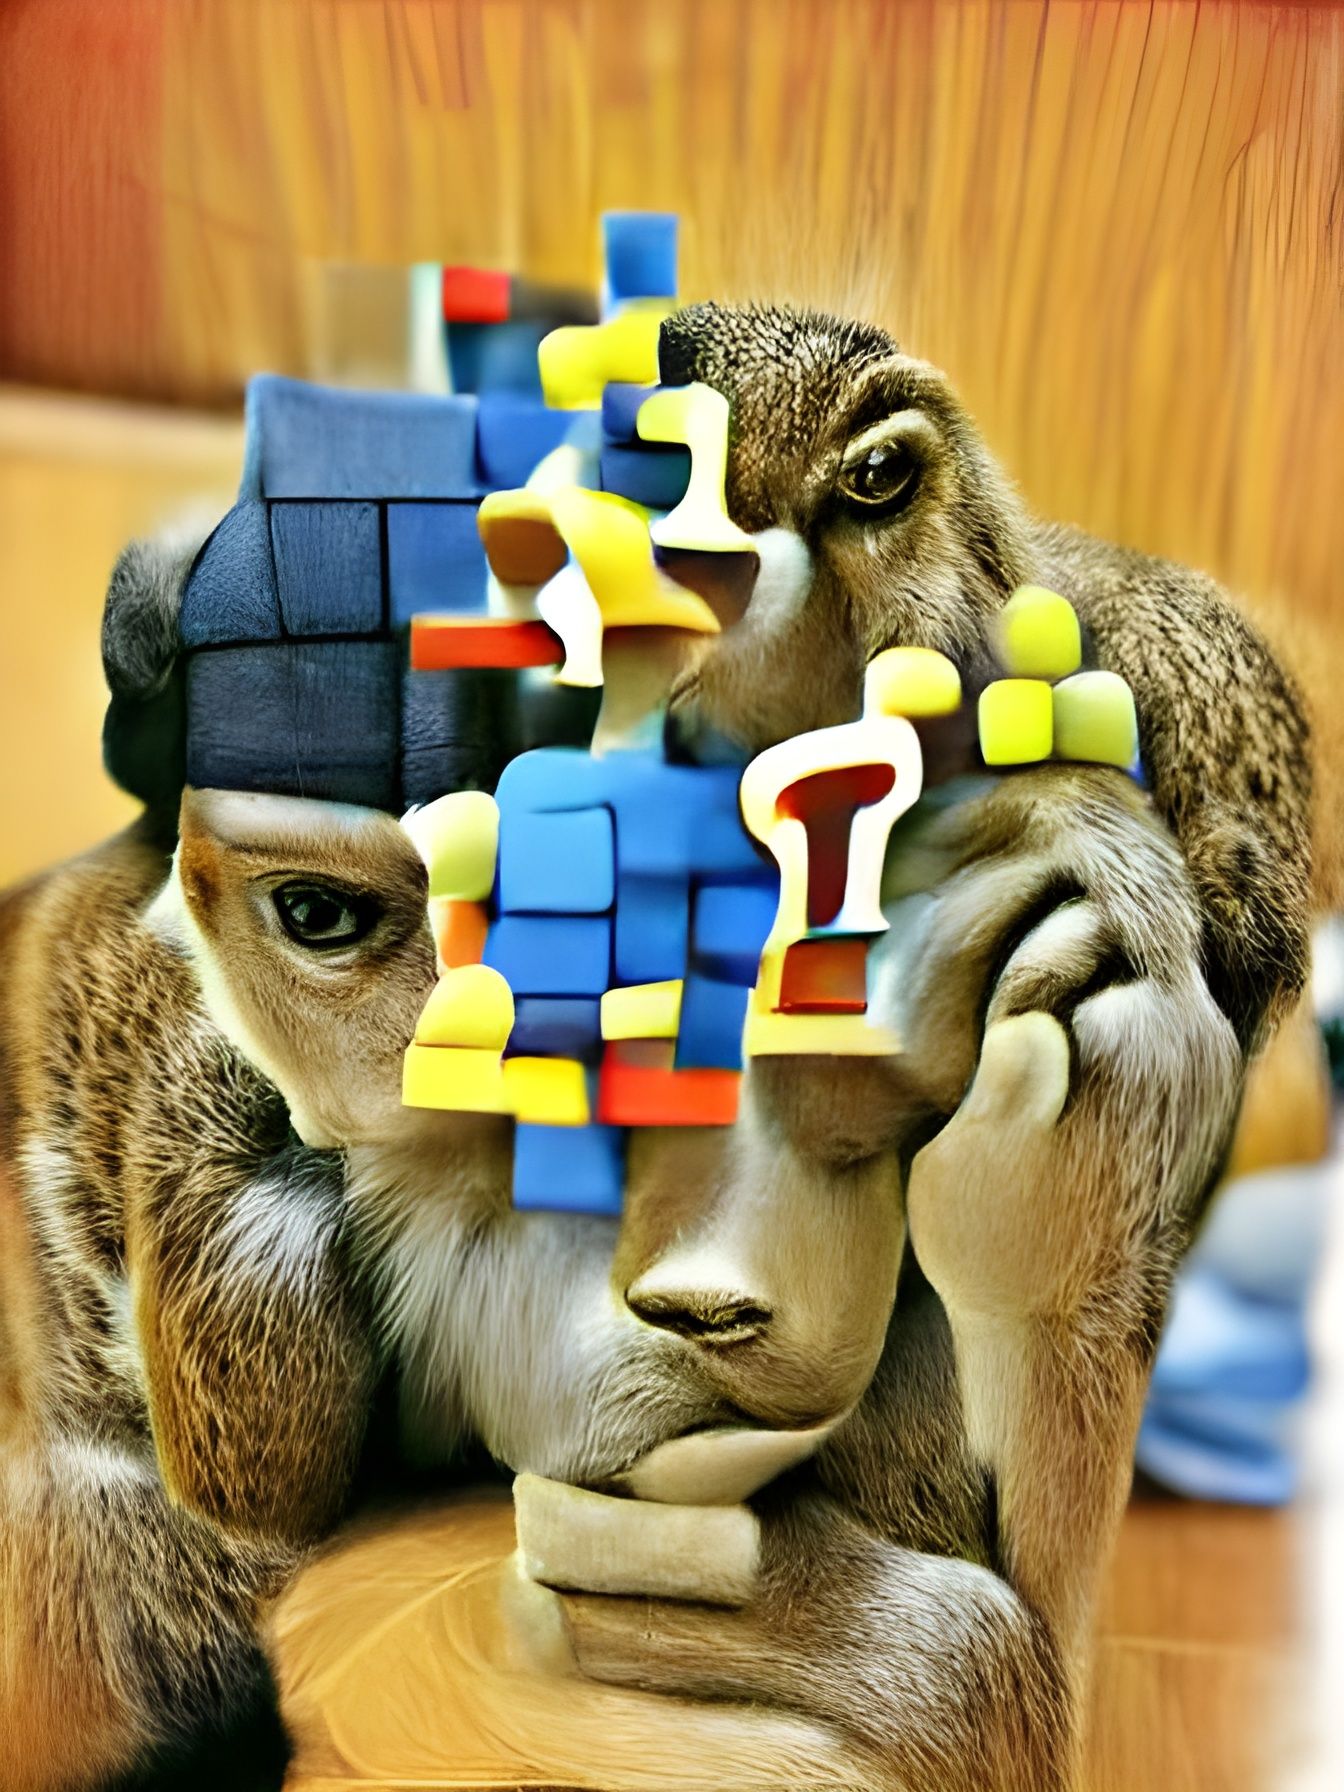 knack for problem solving meaning